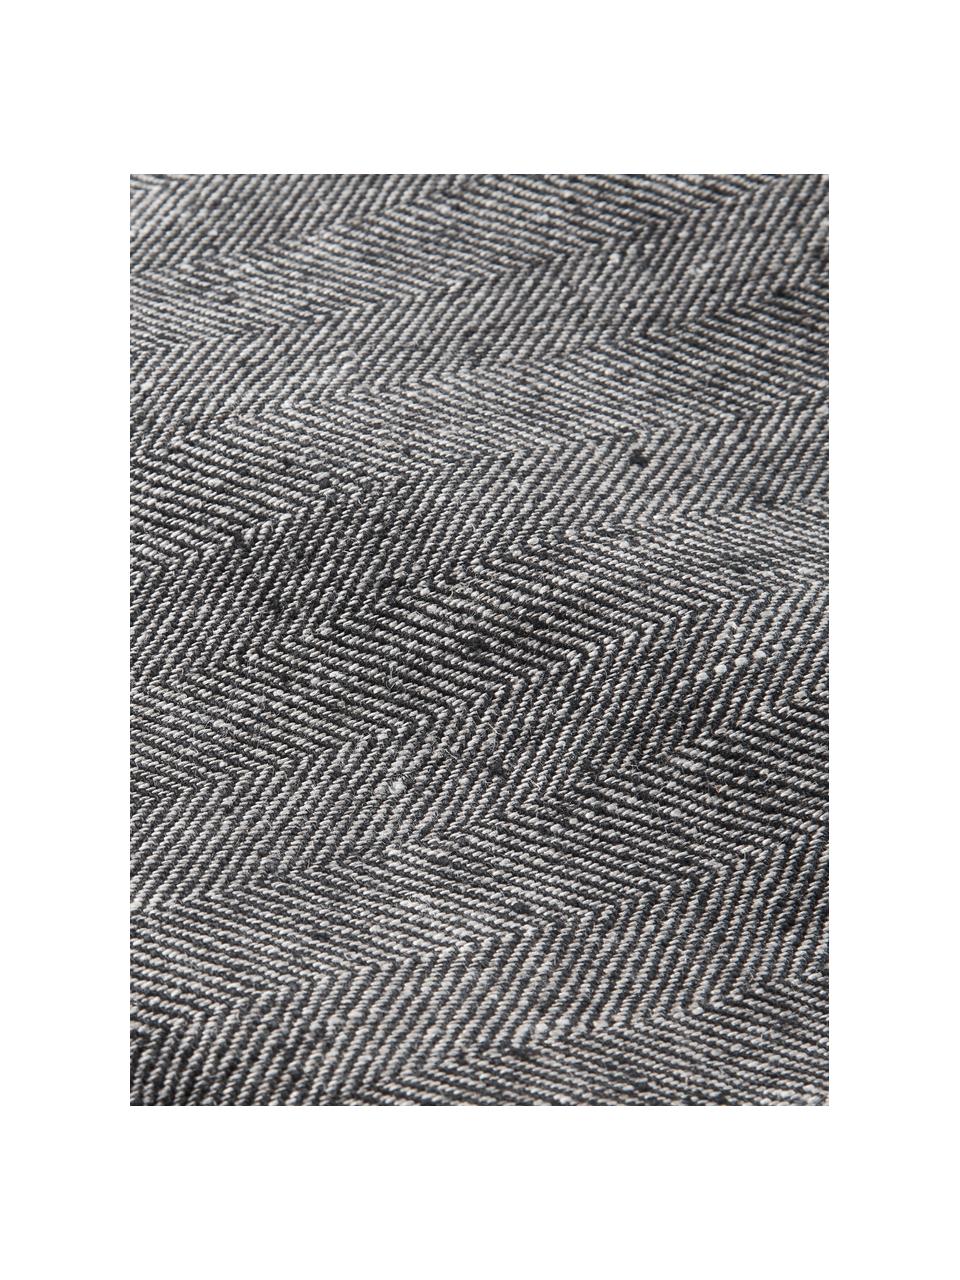 Camino de mesa de lino Audra, 100% lino, Negro, gris, An 46 x L 147 cm